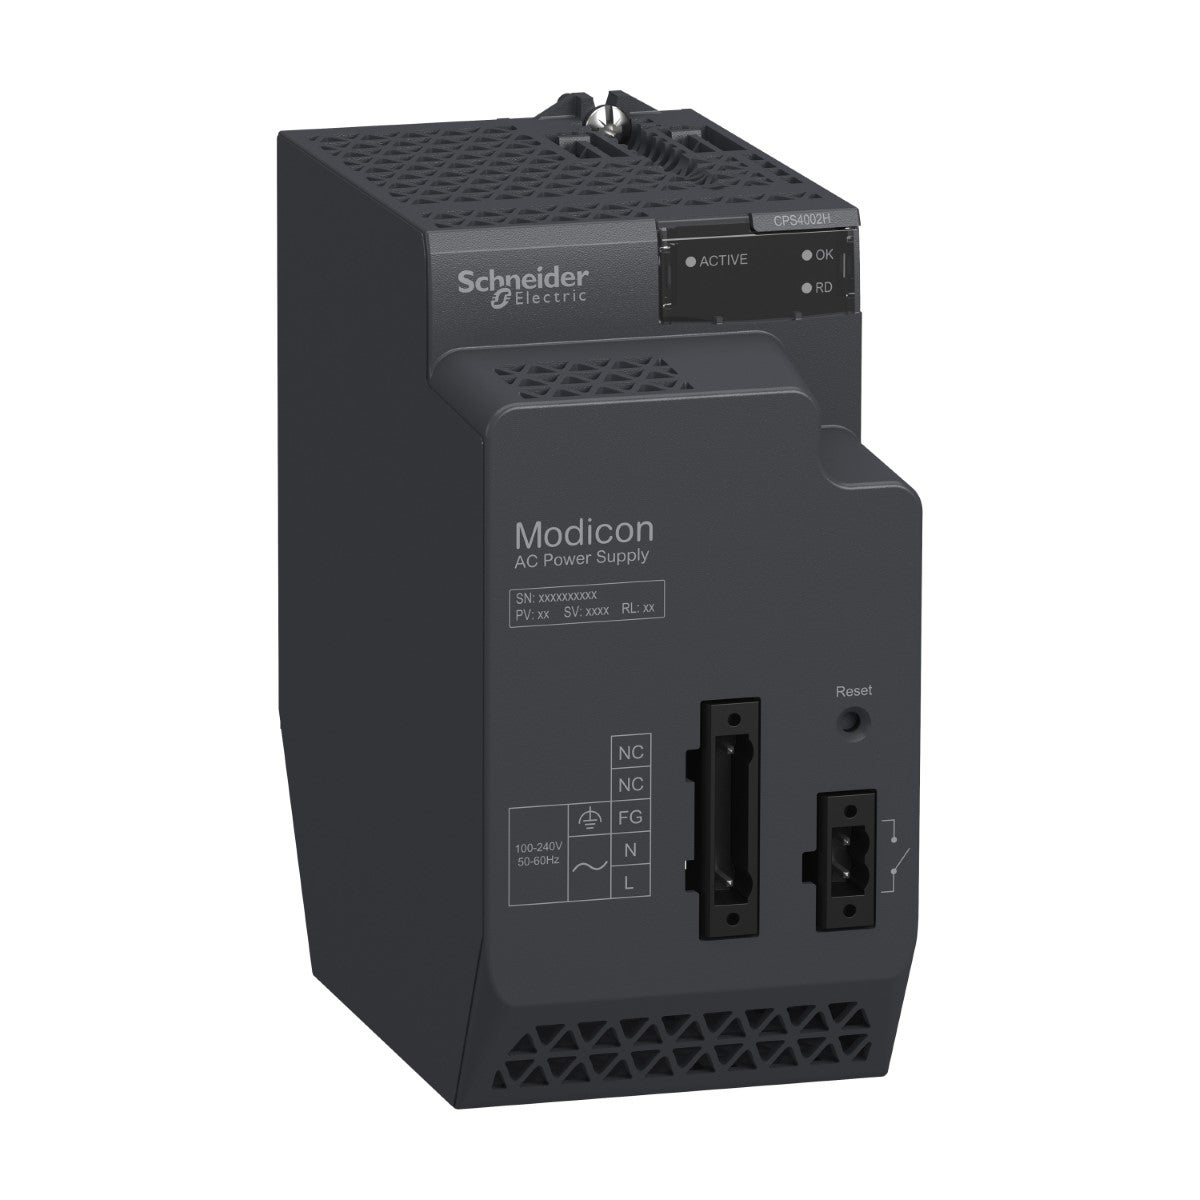 power supply module, Modicon X80, 100 to 240V AC, for severe environment